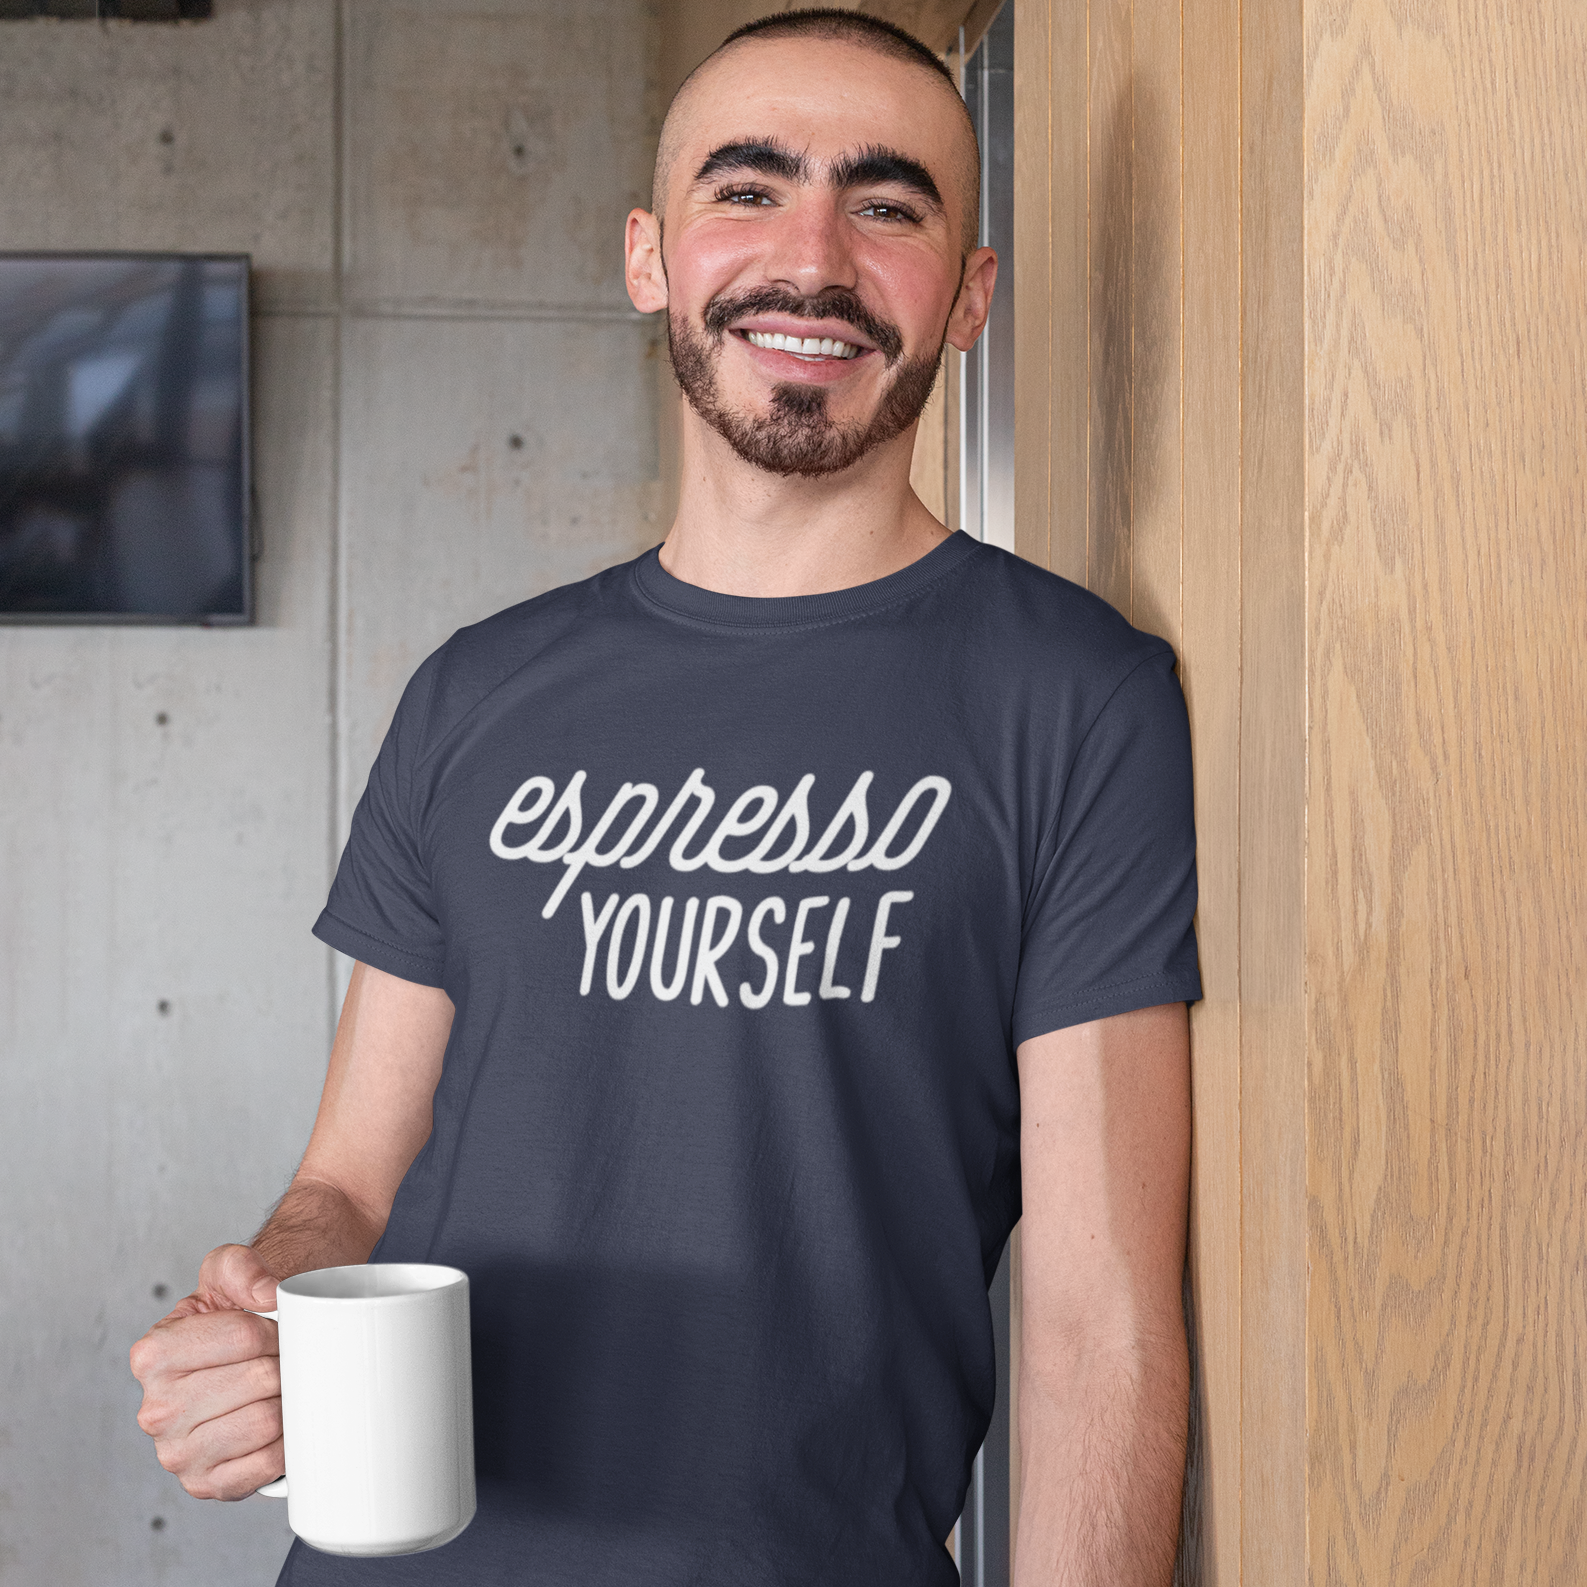 'Espresso yourself' adult shirt